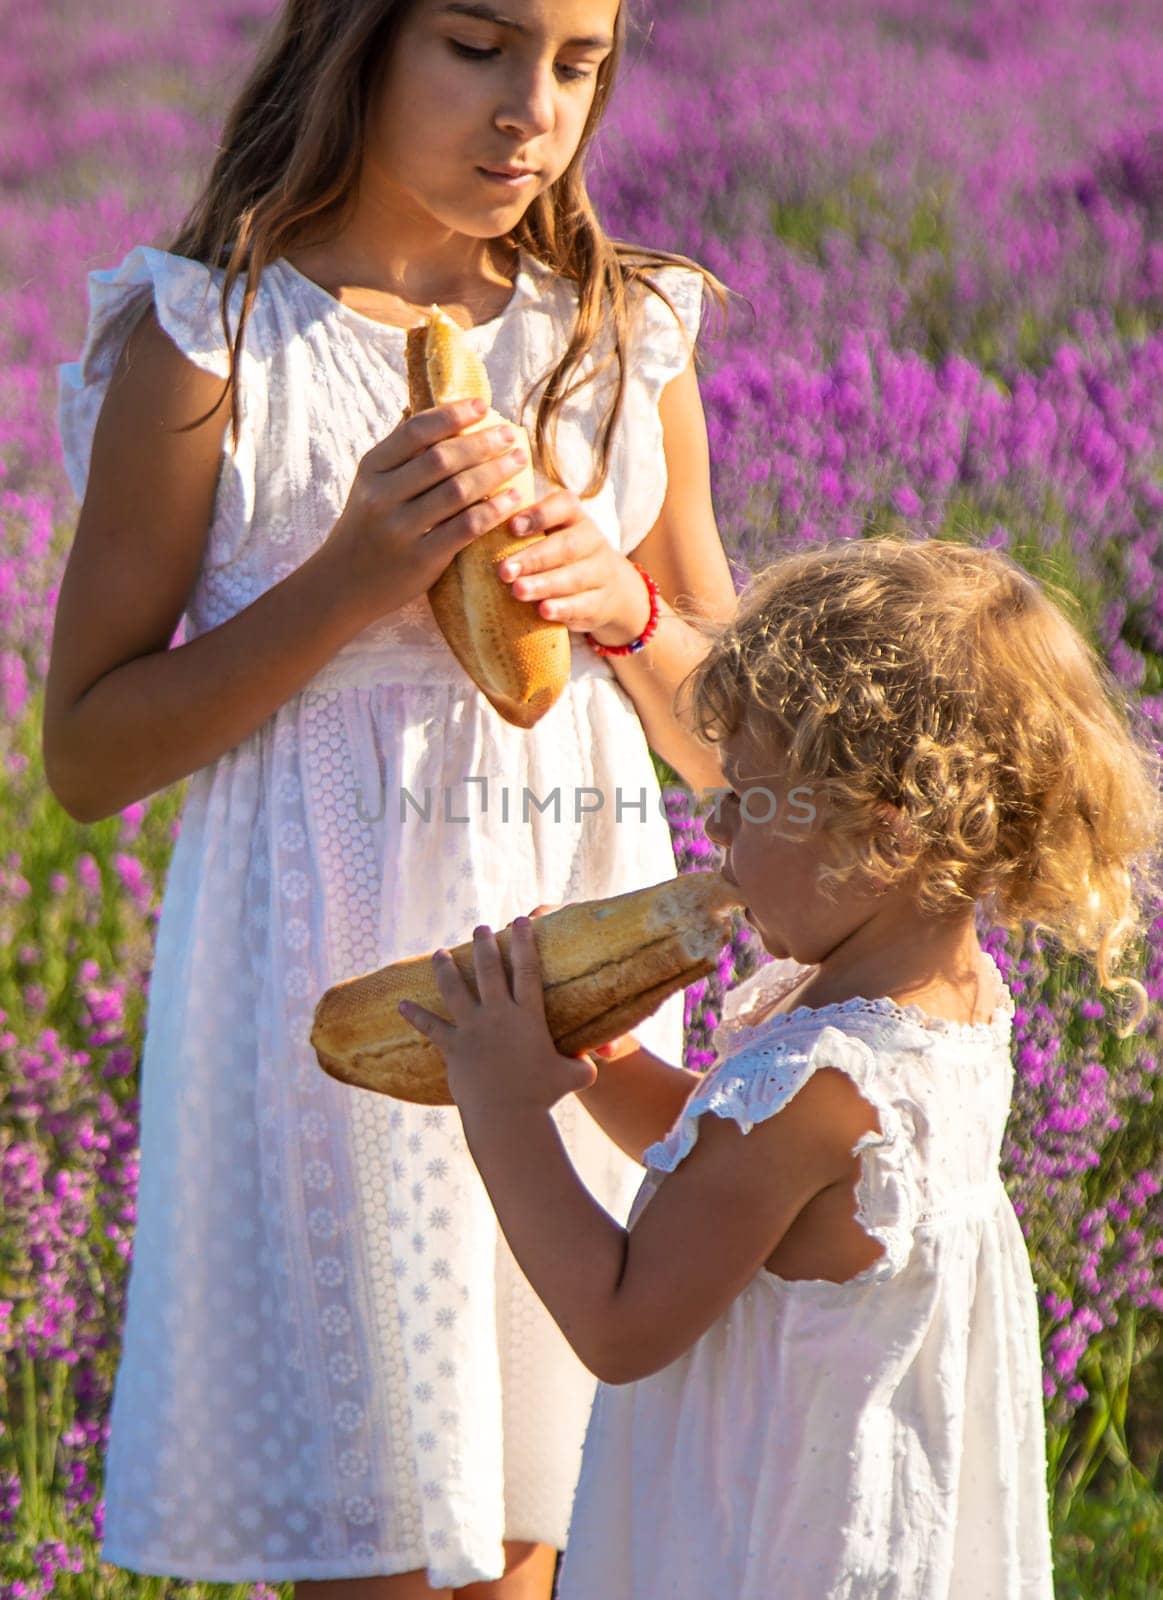 Children eat a baguette in a lavender field. Selective focus. by yanadjana